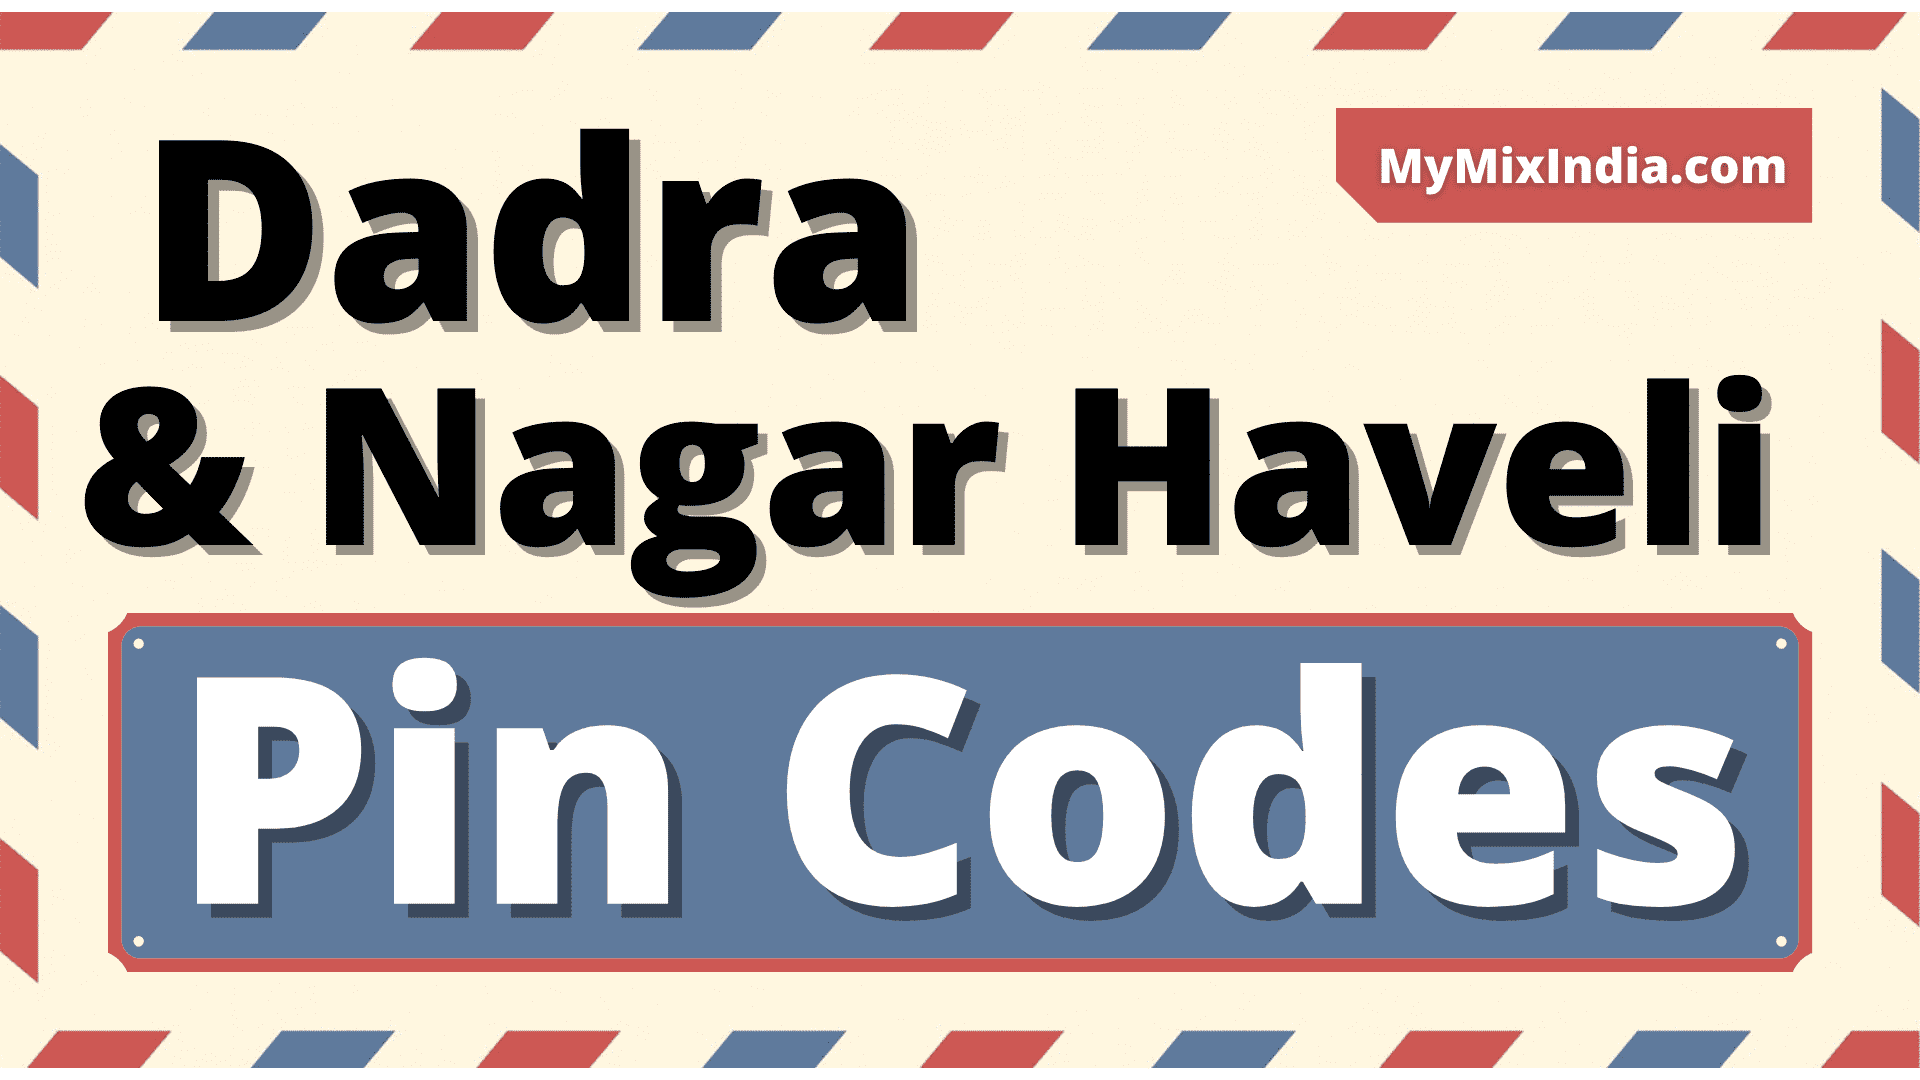 all dadra and nagar pin codes - mymixindia.com